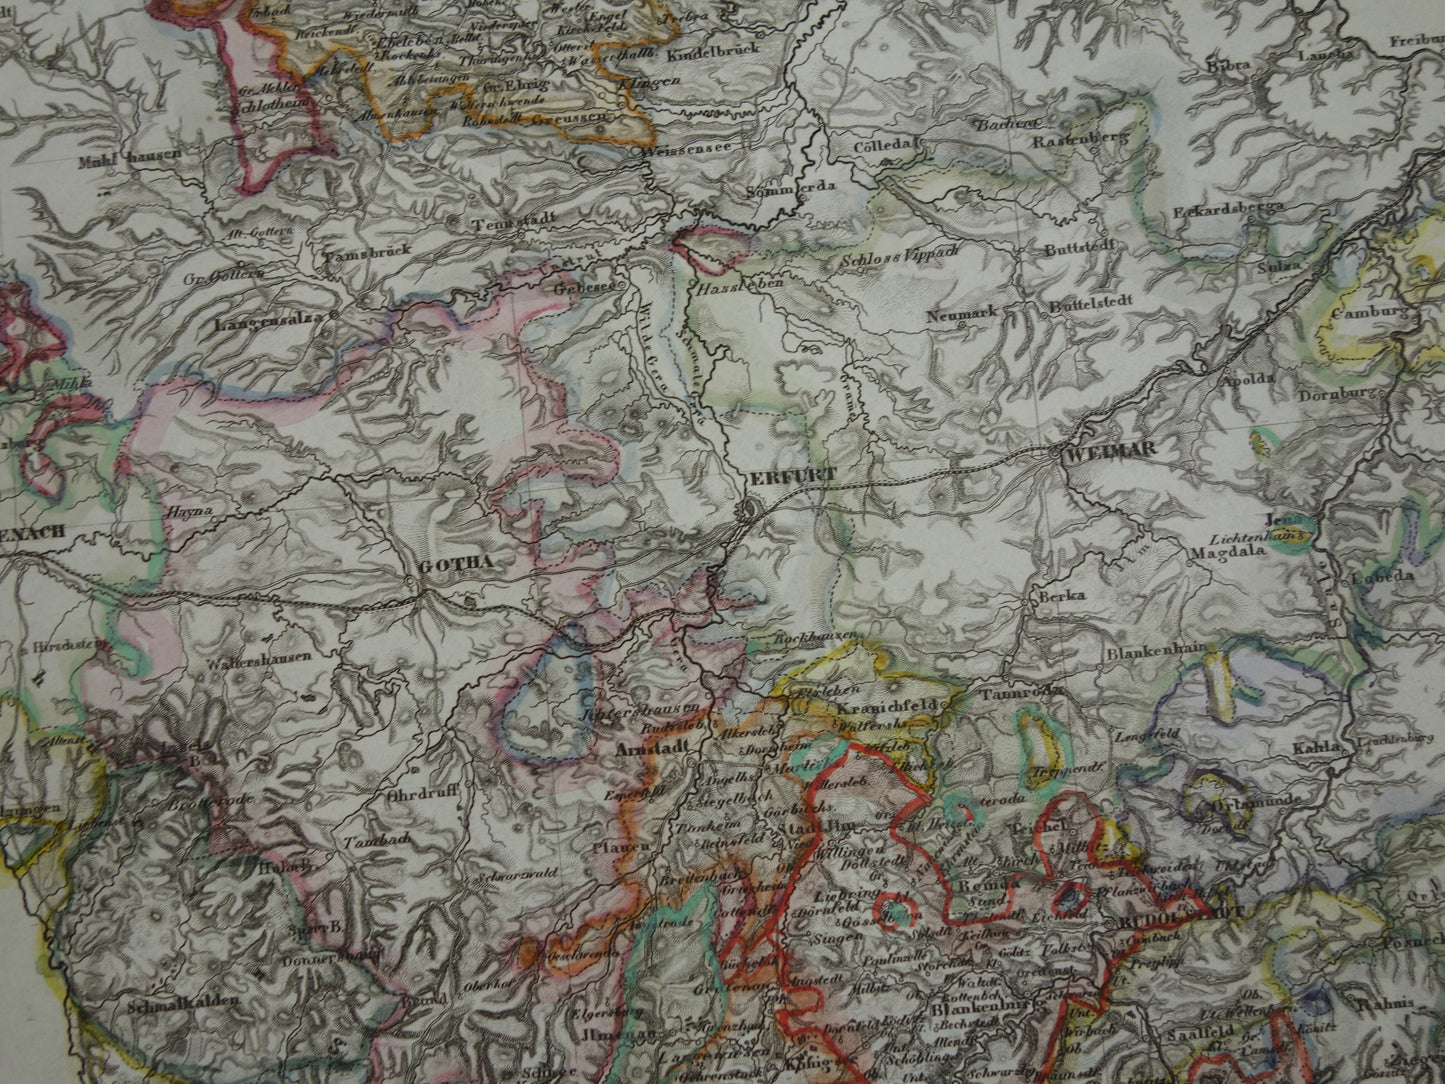 Schwarzburg-Sondershausen oude kaart Duitsland uit 1851 originele antieke landkaart Gotha Rudolstadt